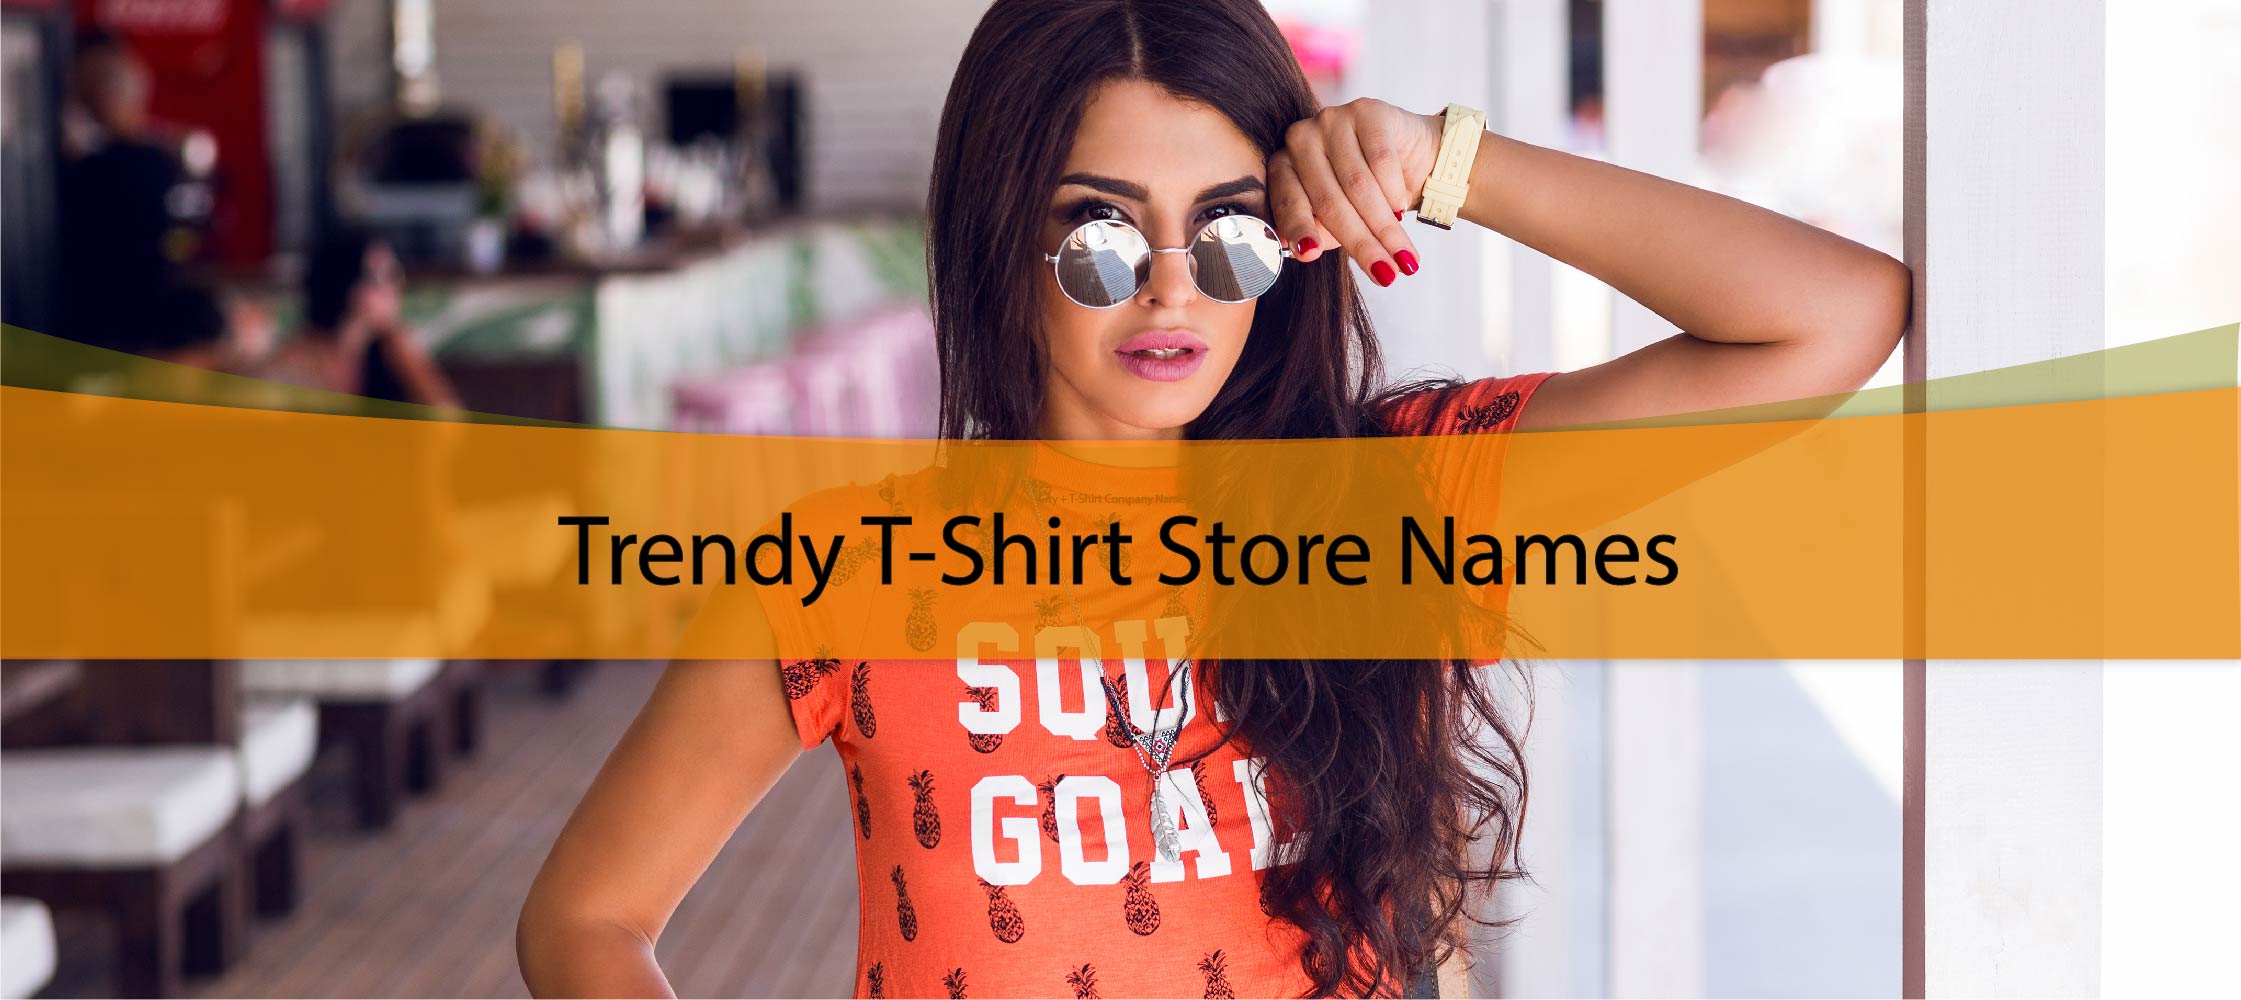 Trendy T-Shirt Store Names